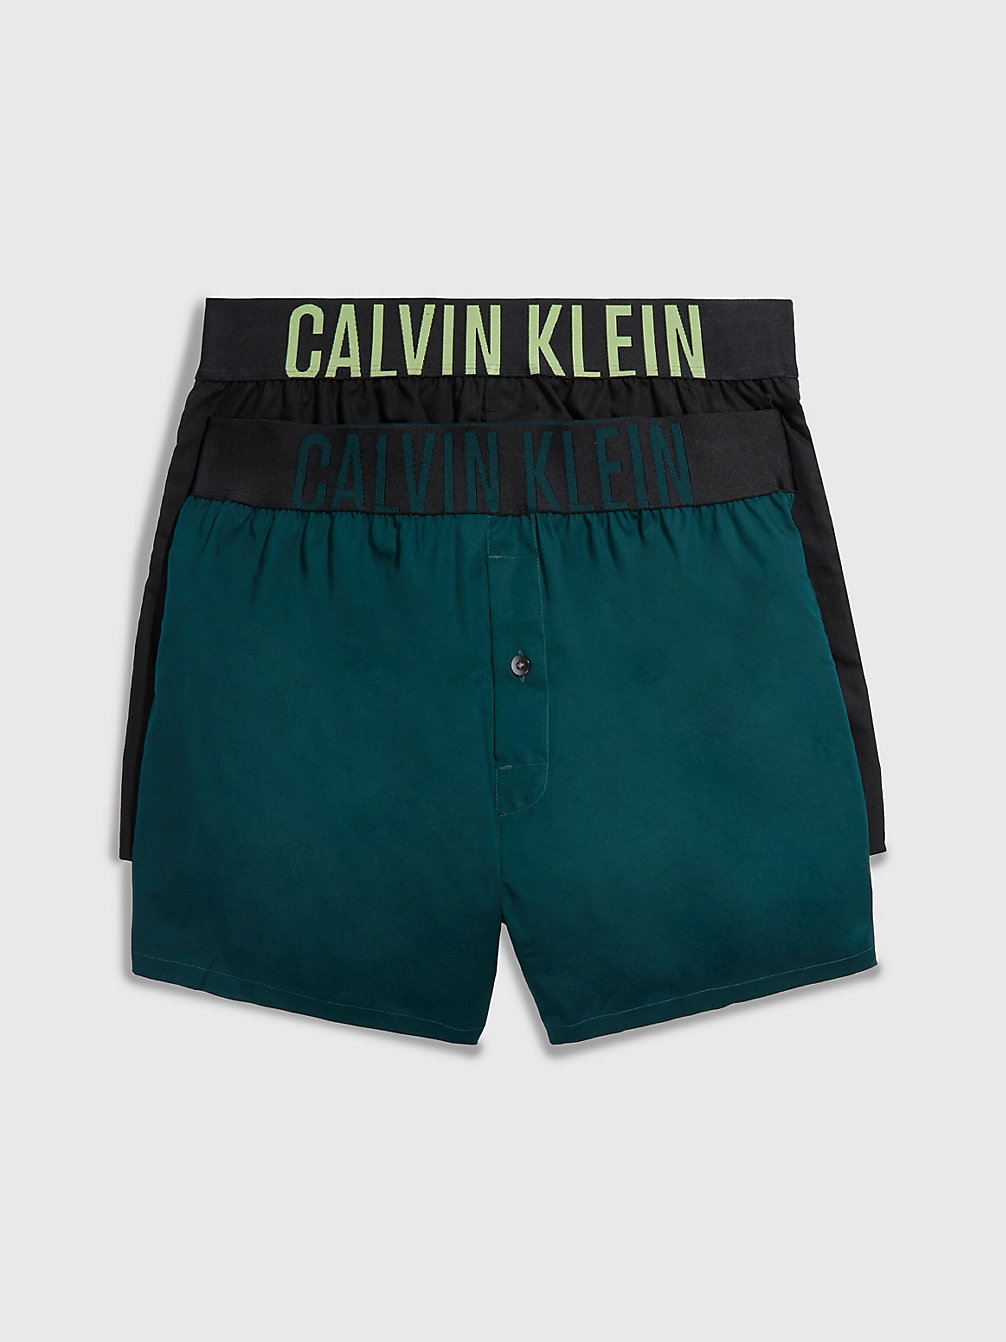 B-TROPIC LIME, PONDEROSA PINE > 2-Pack Slim Fit Boxershorts - Intense Power > undefined heren - Calvin Klein